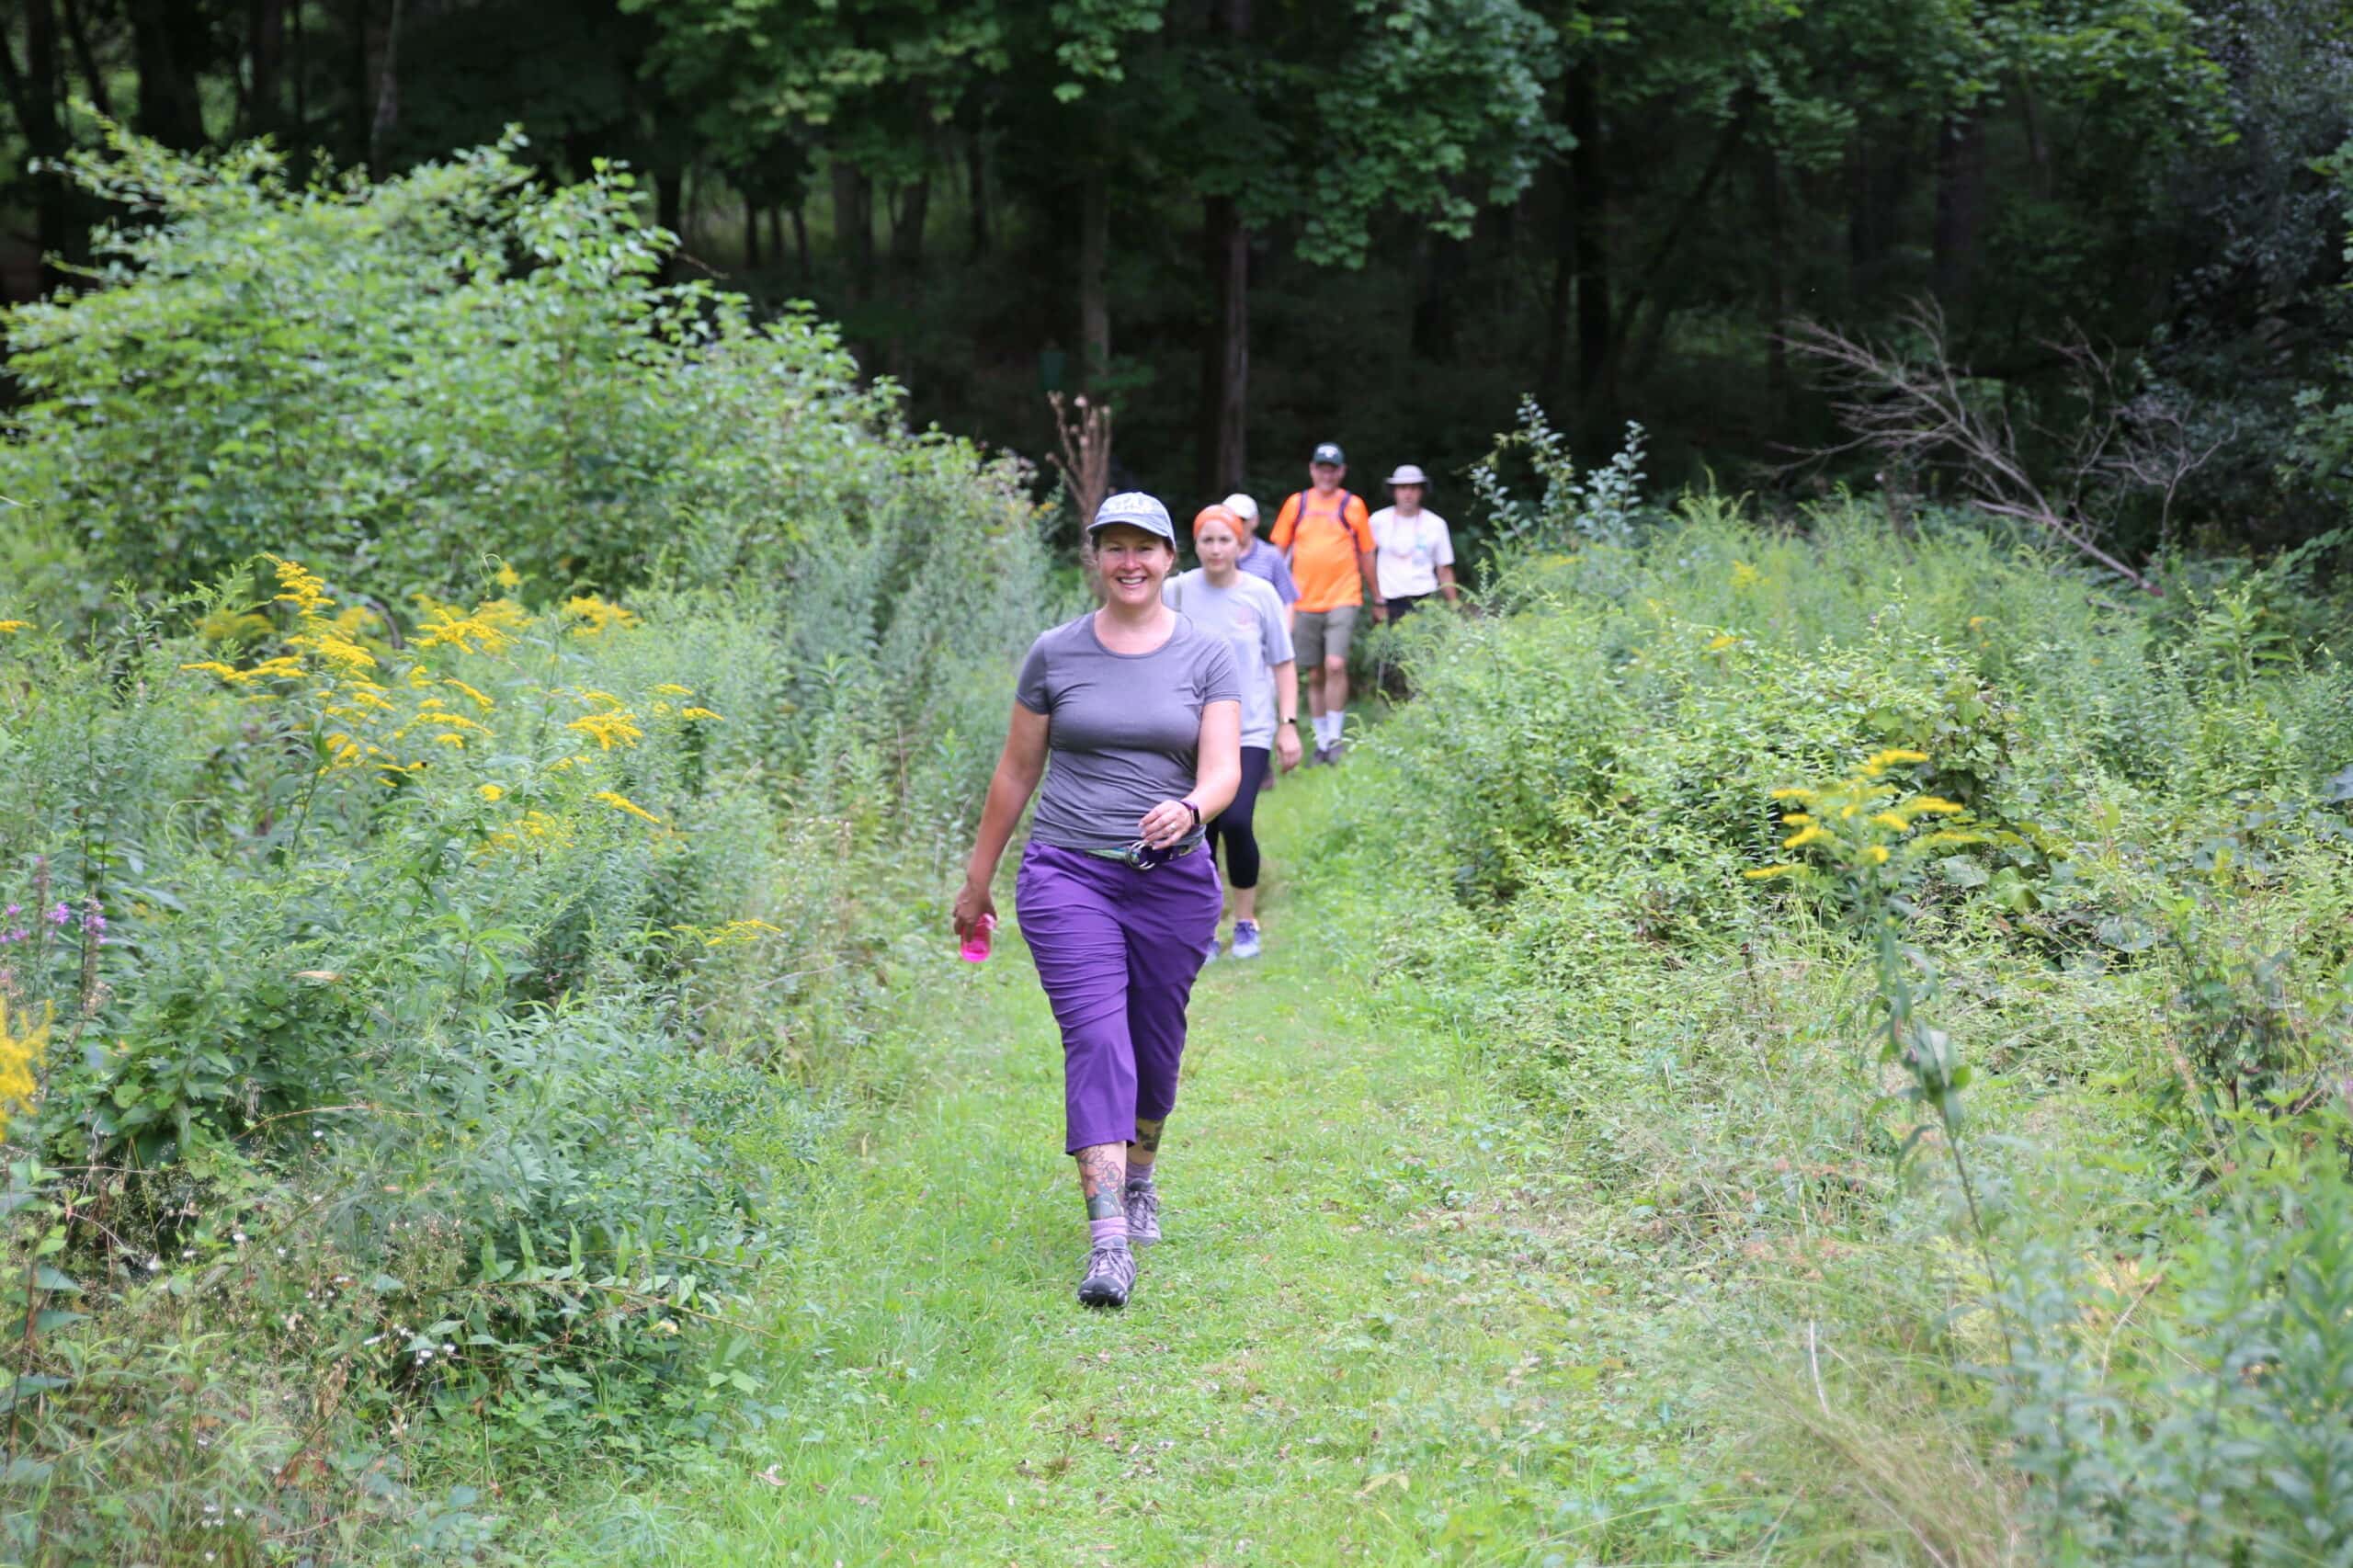 Enjoy nature near Boston with Community trails in Westwood